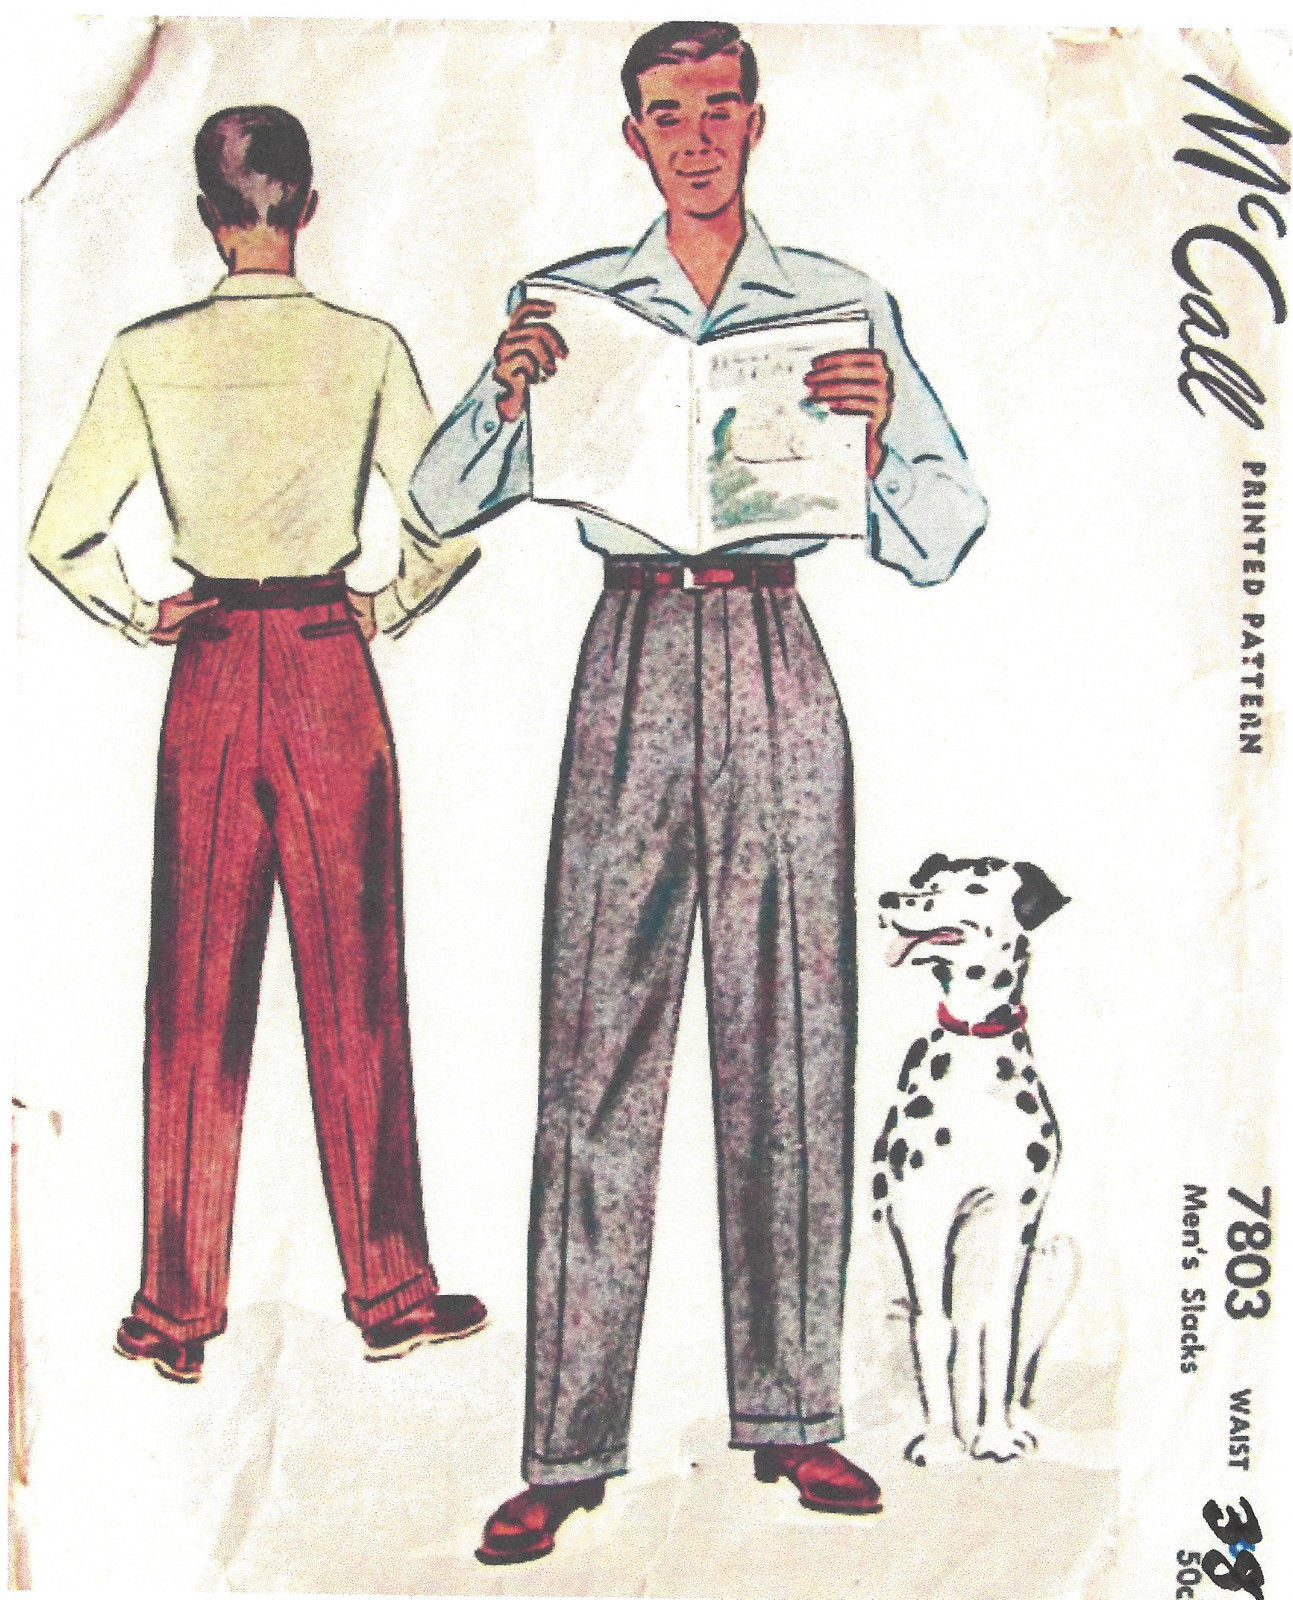 Mens pants patterns | Wardrobe By Me - We love sewing!